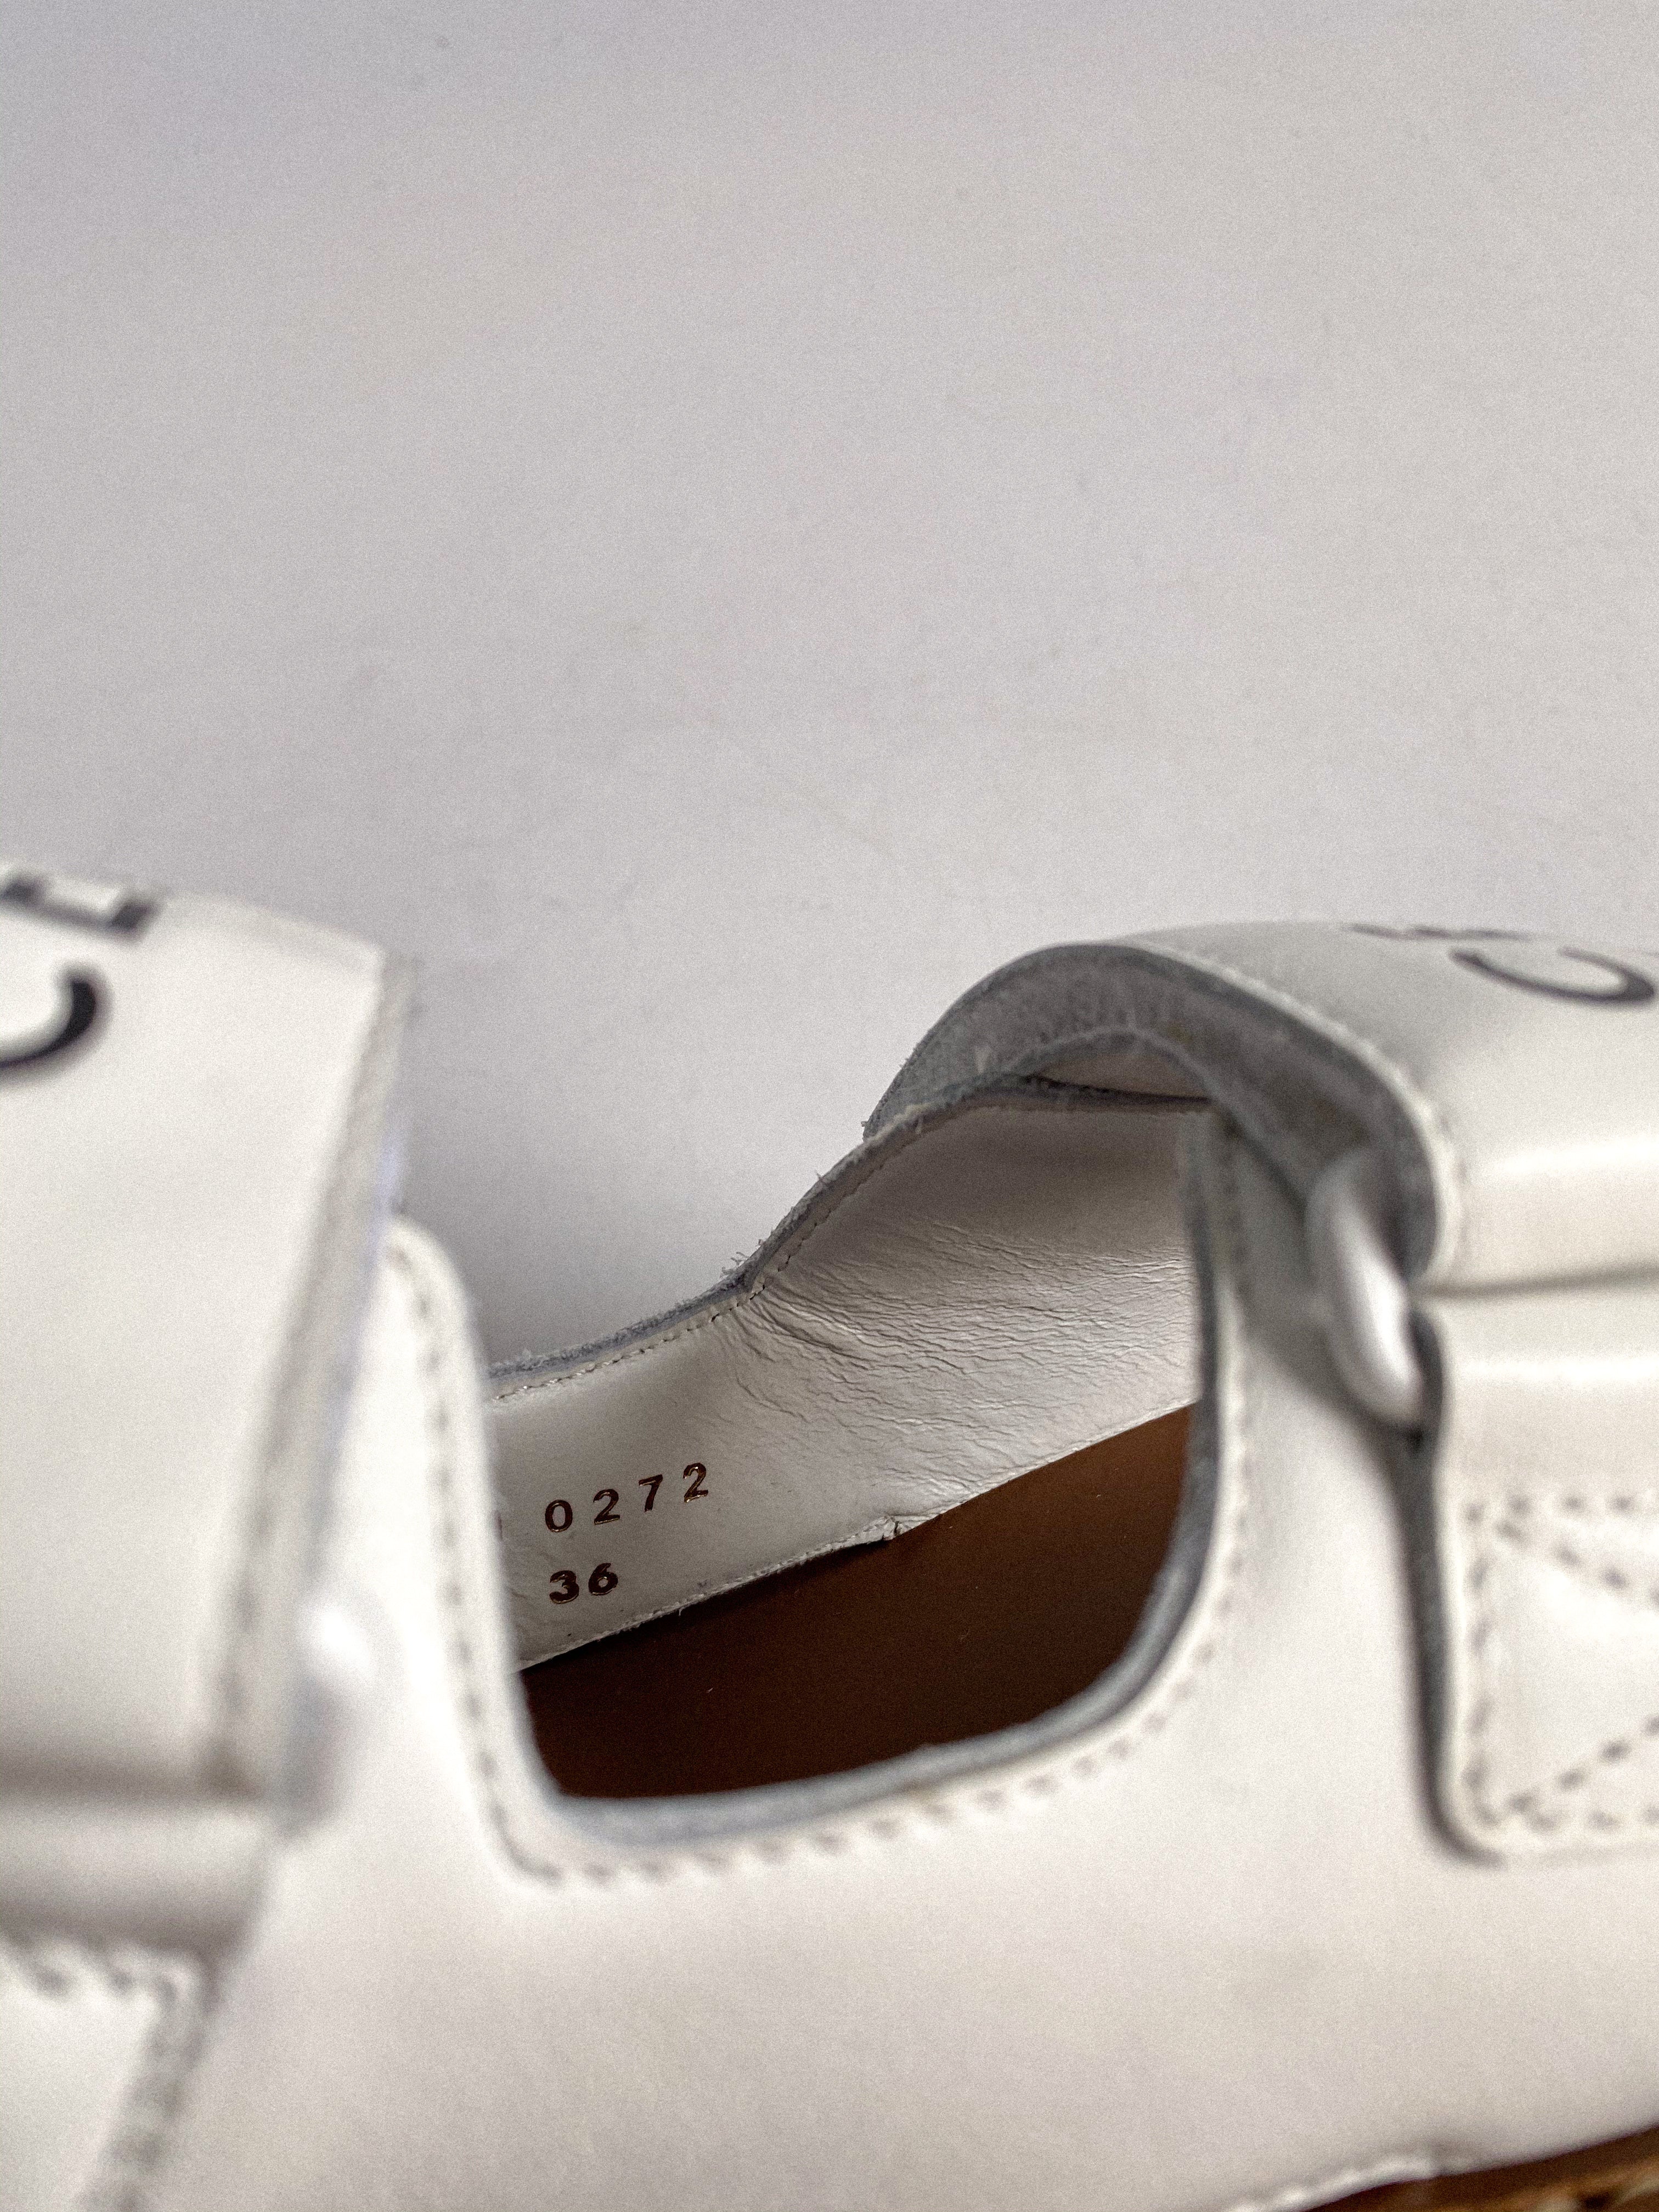 Celine Leo Scratch Sandals in White Calfskin Size 36 EUR (25cm)